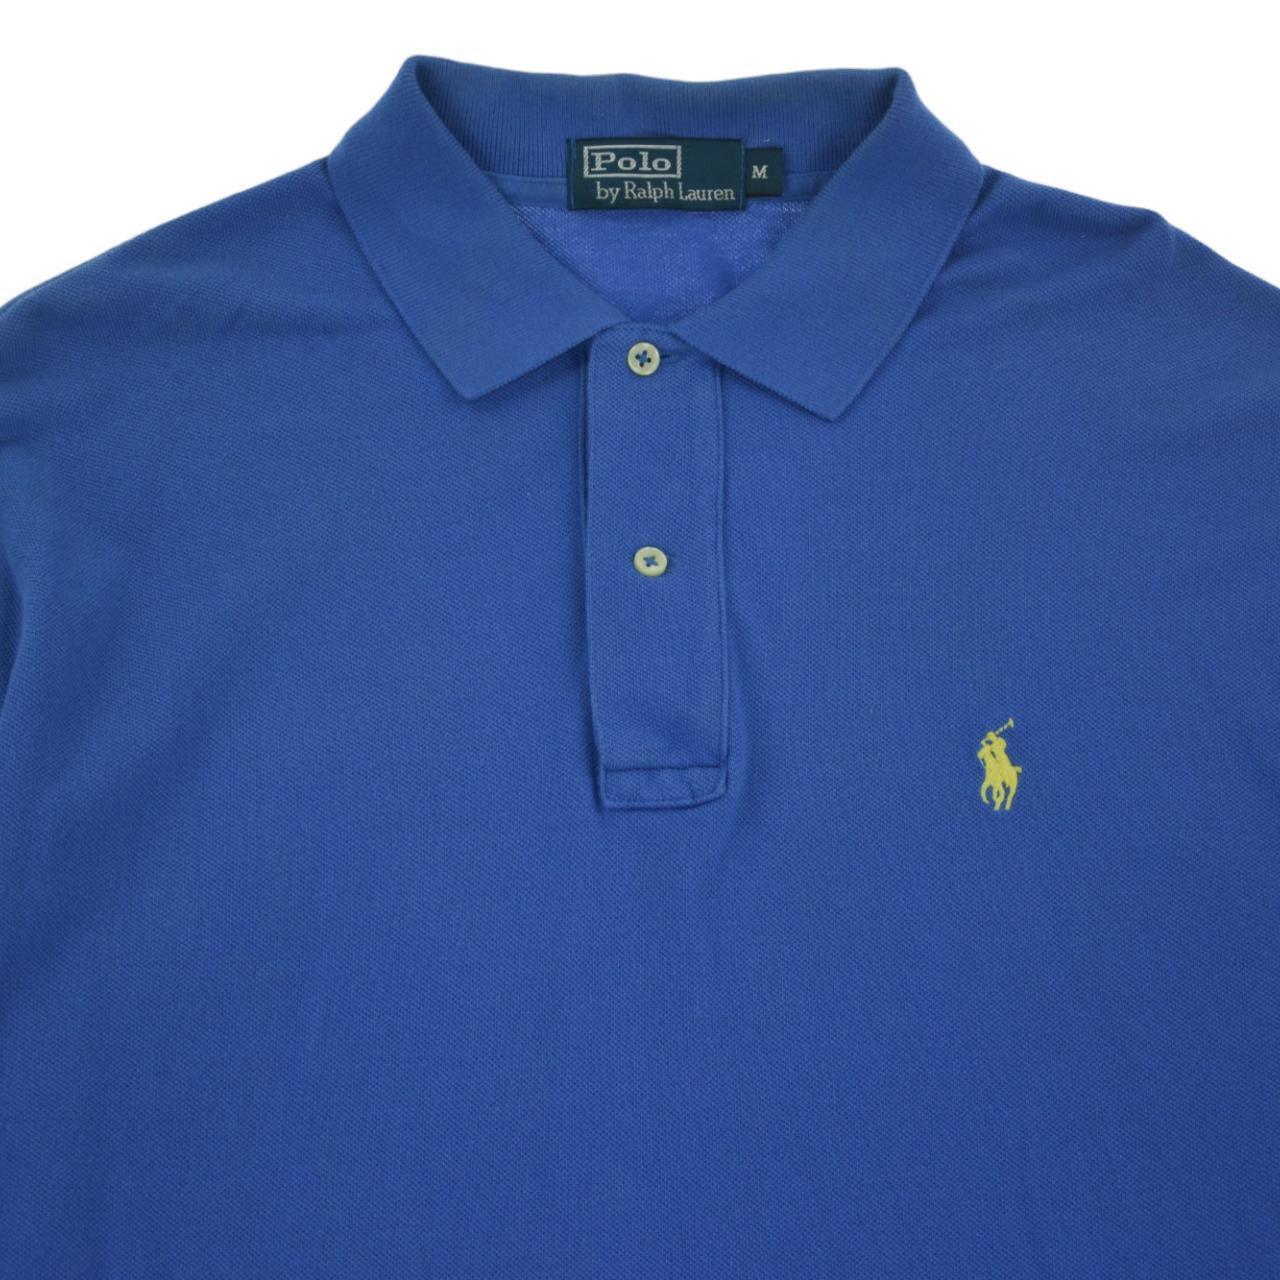 Vintage Polo Ralph Lauren Long Sleeve Polo Shirt Size L - Known Source